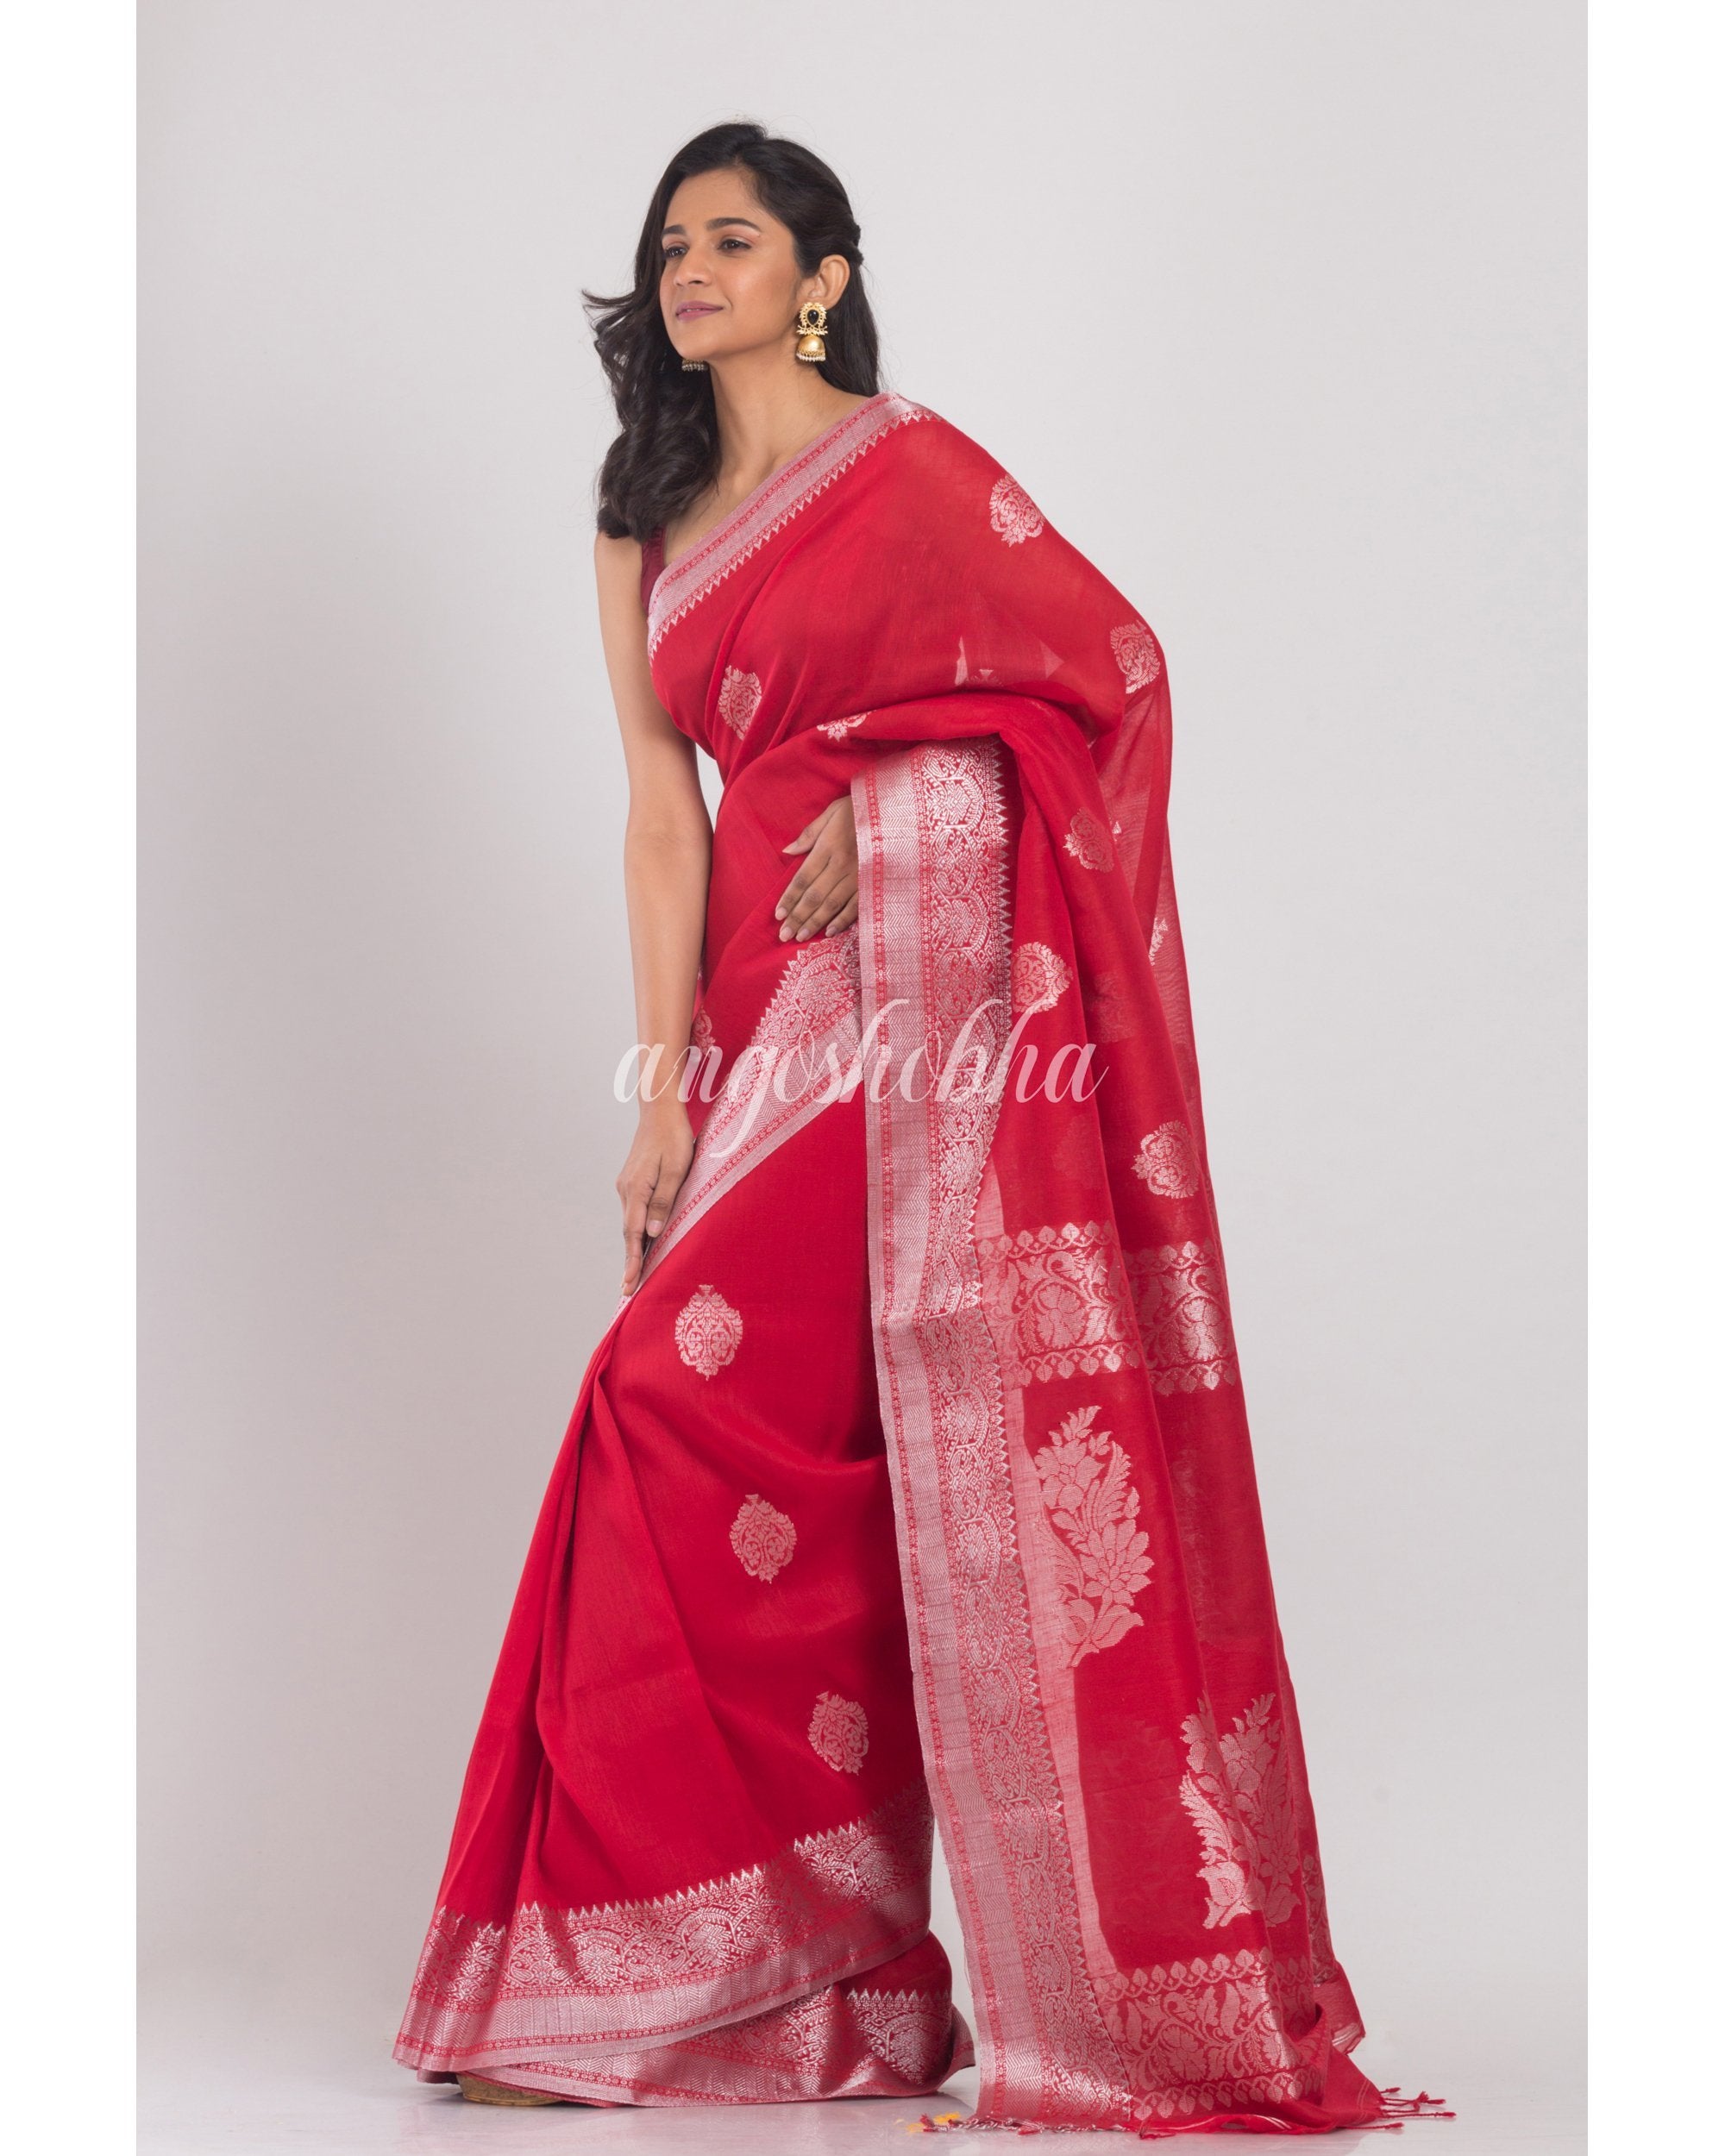 Women's Red Cotton Linen Jamdani Saree - Angoshobha